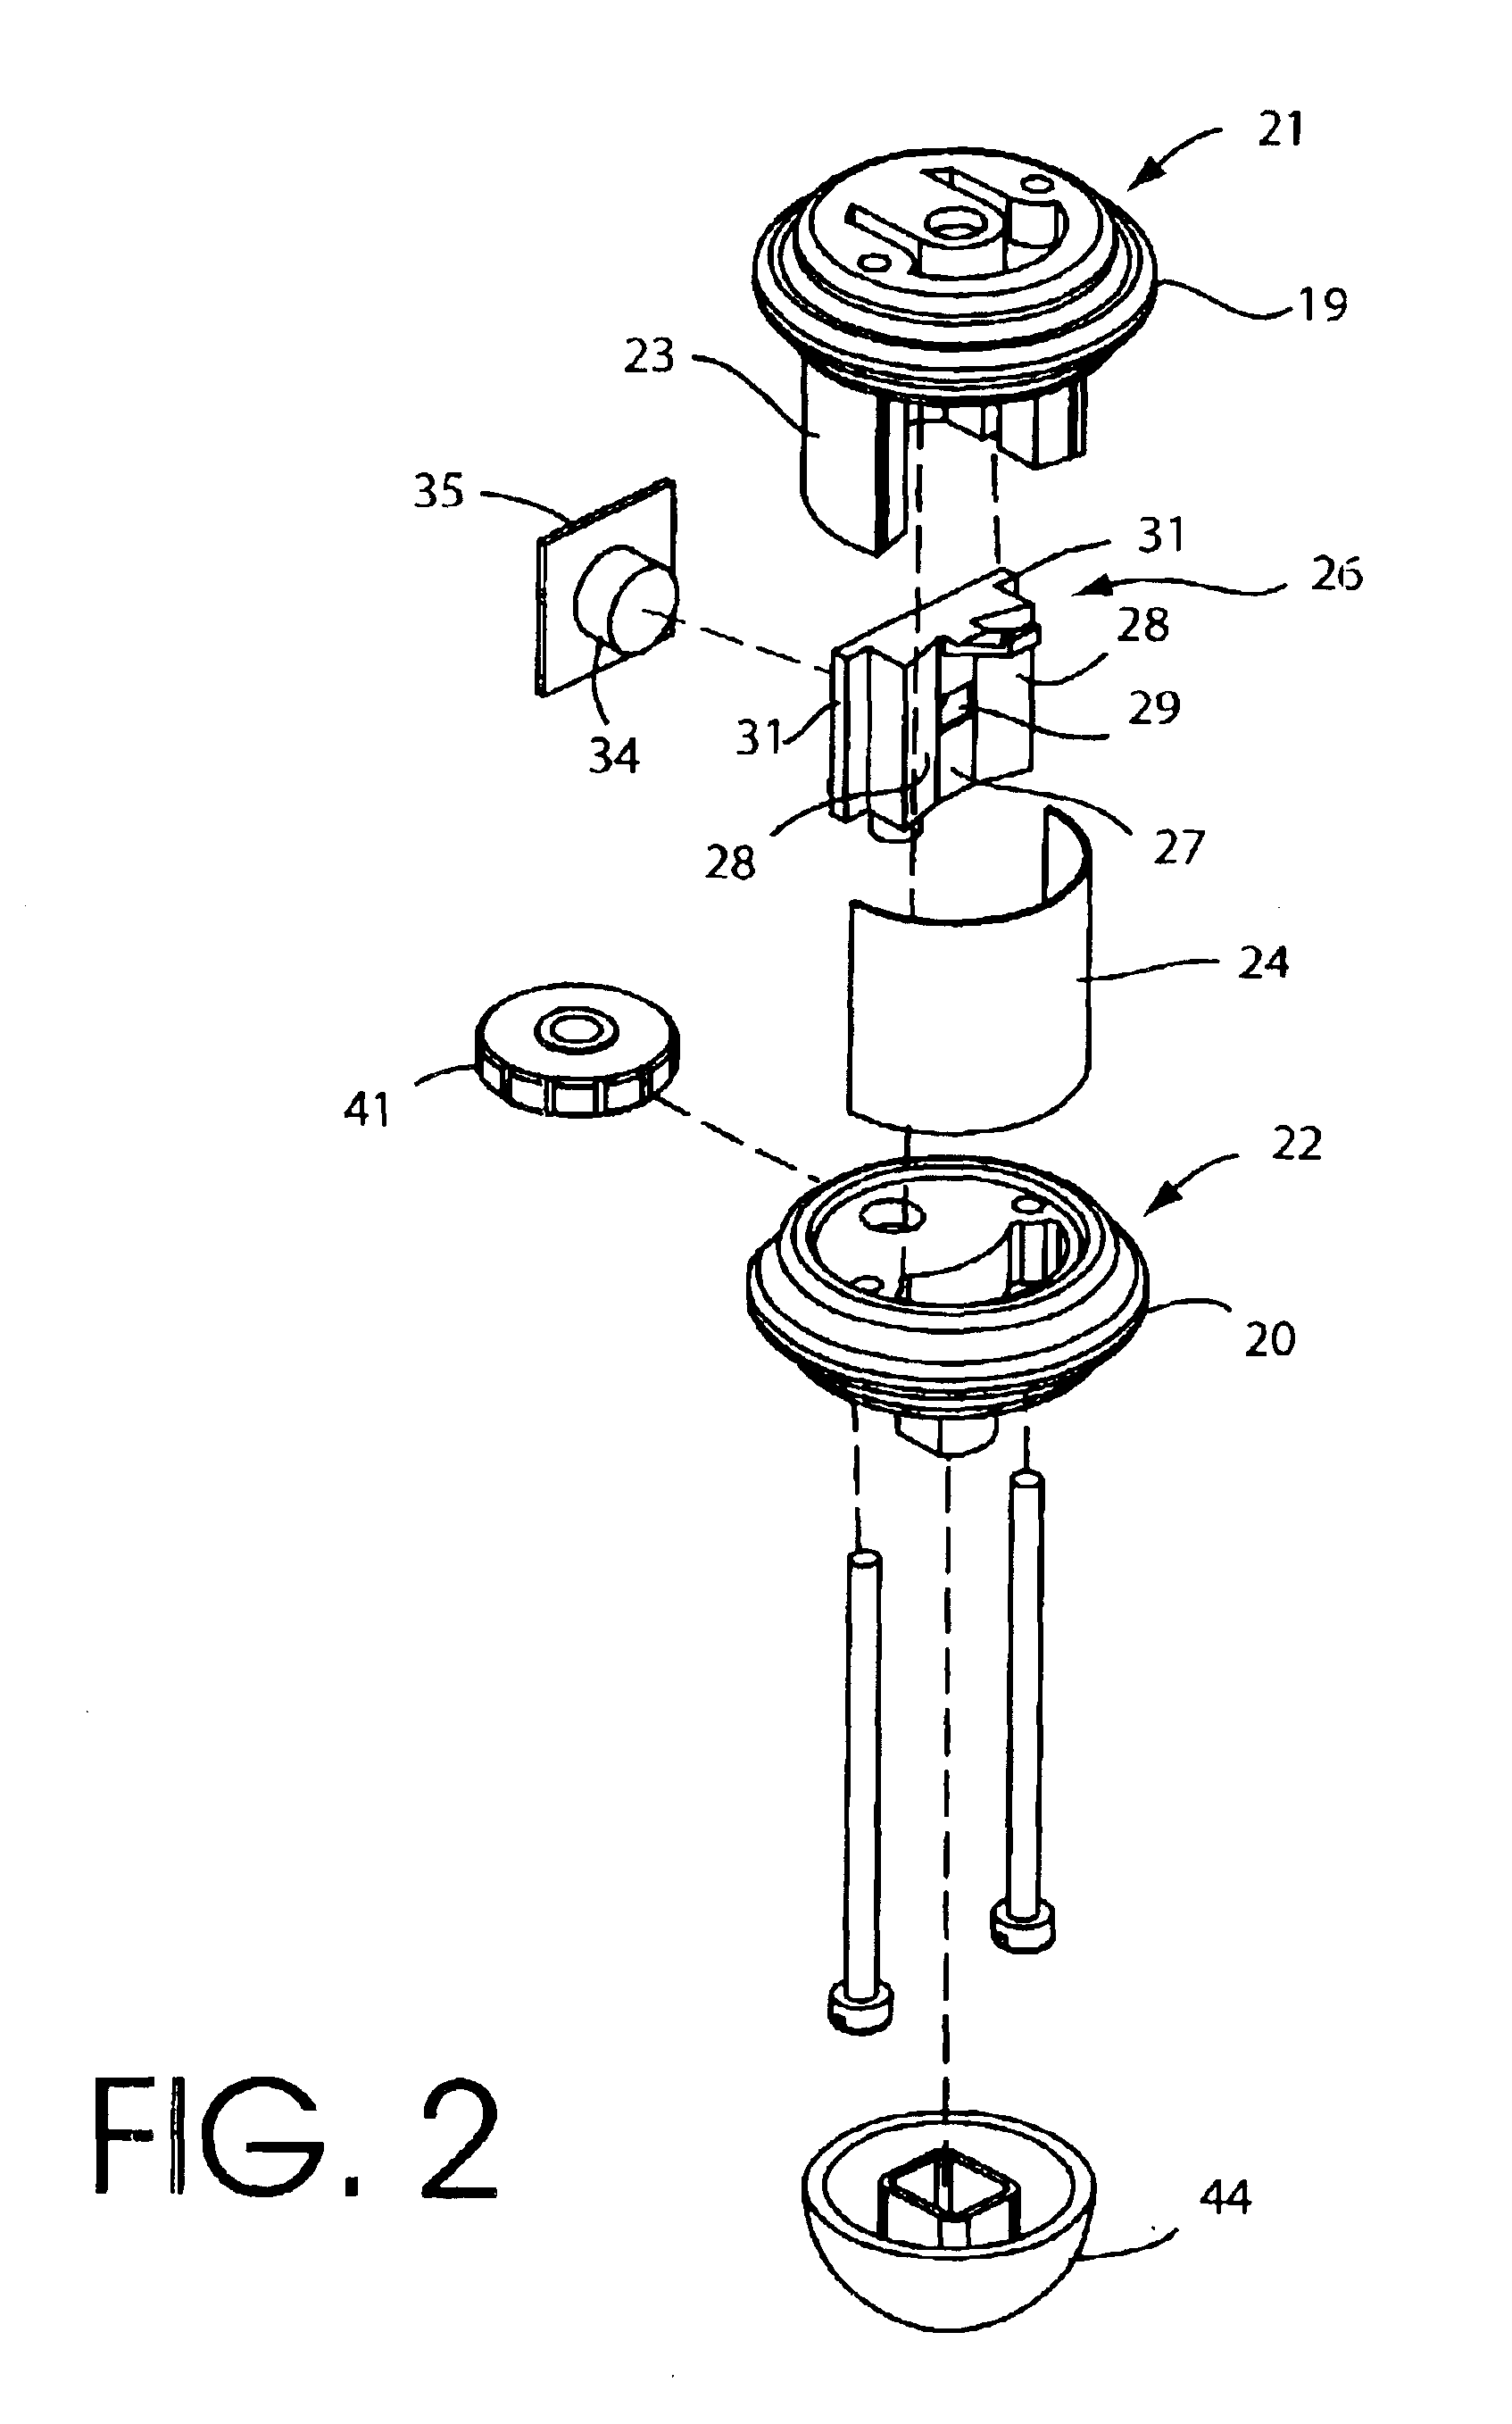 PIR motion detector for a decorative lantern